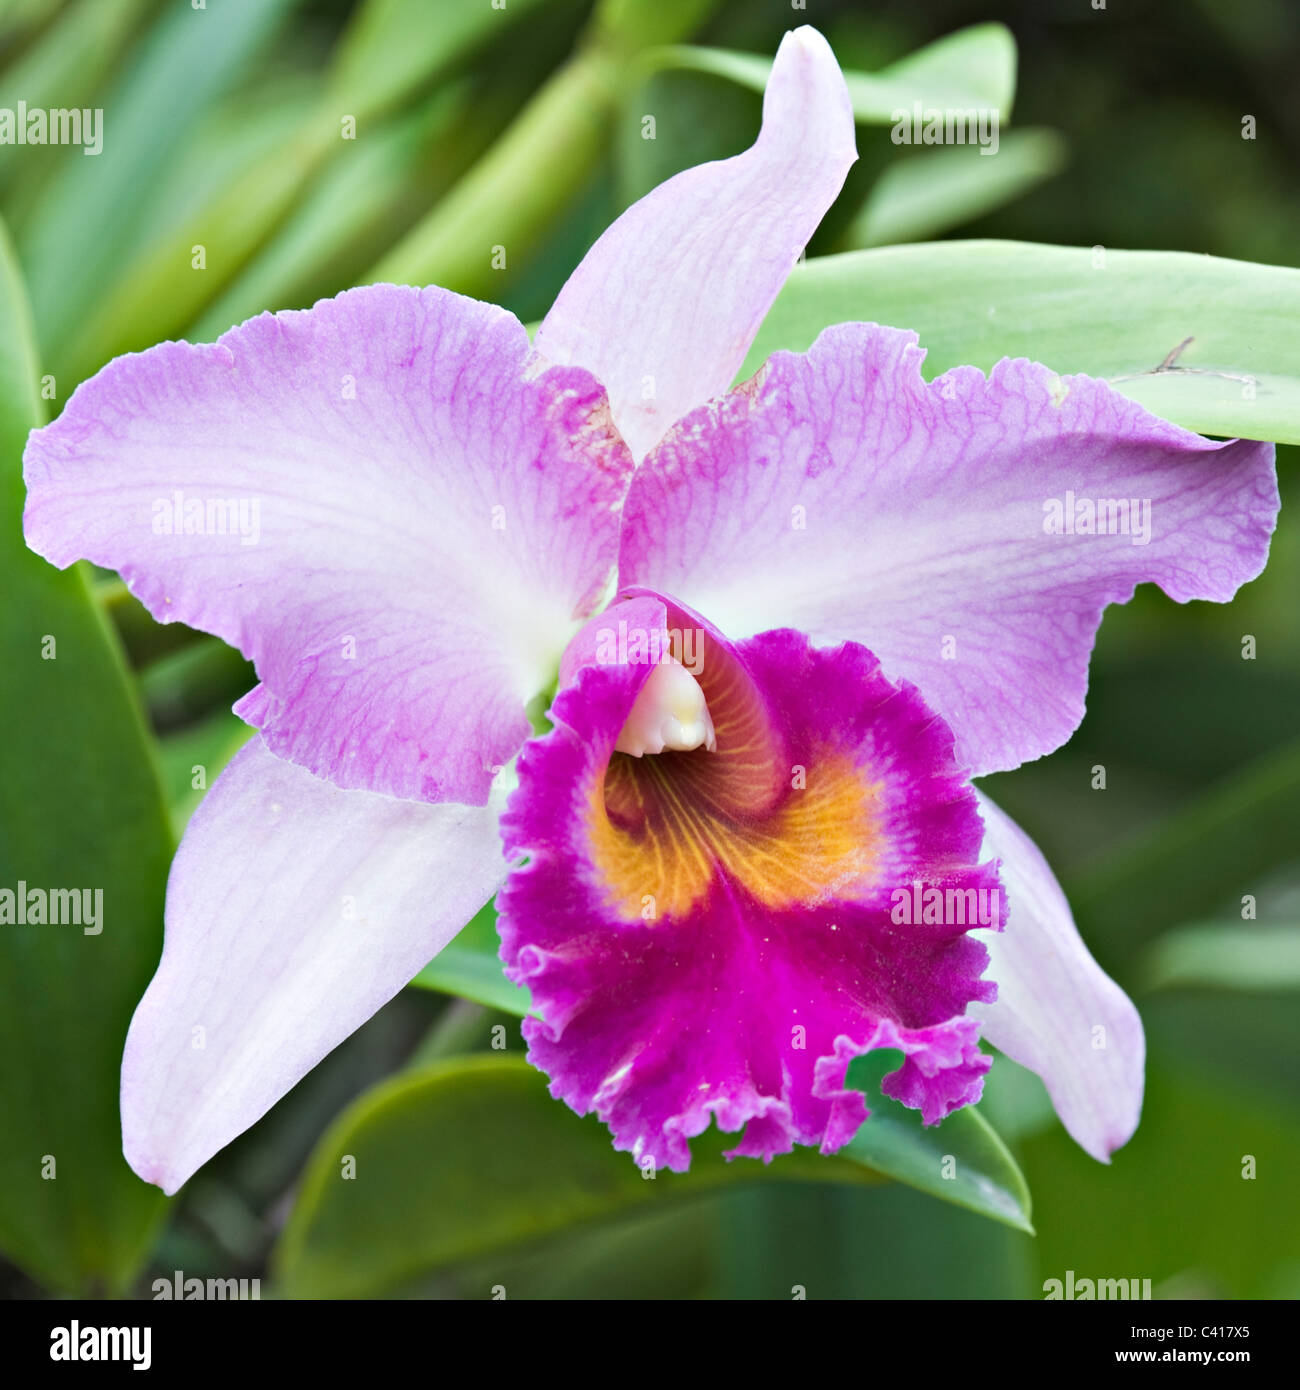 Vanda Miss Joaquim Orchidee Blume in der National Orchid Garden Singapur Republik Singapur Asien Stockfoto